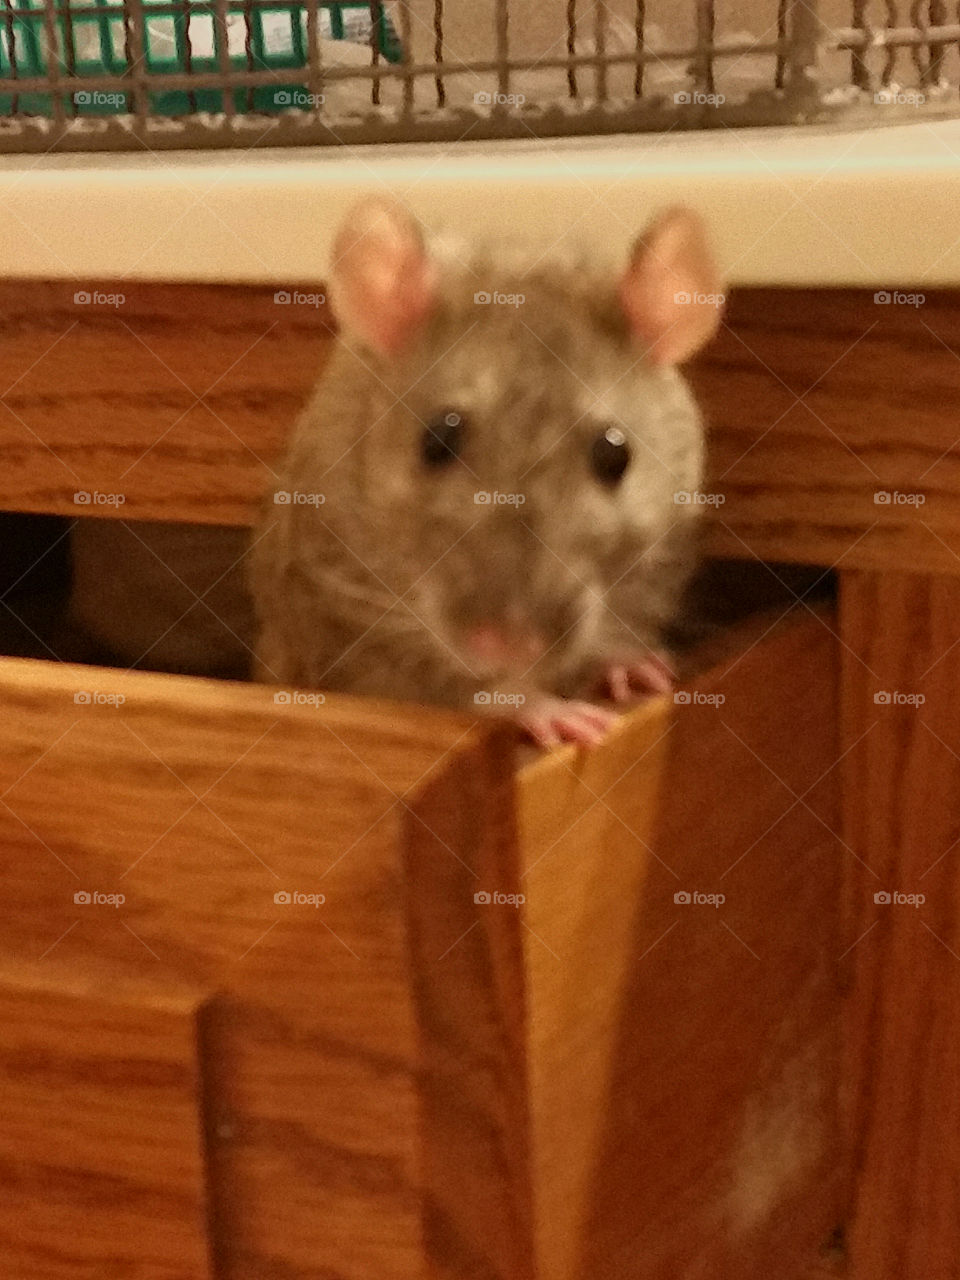 My aguti pet rat, Mattie, peeking out of a drawer.